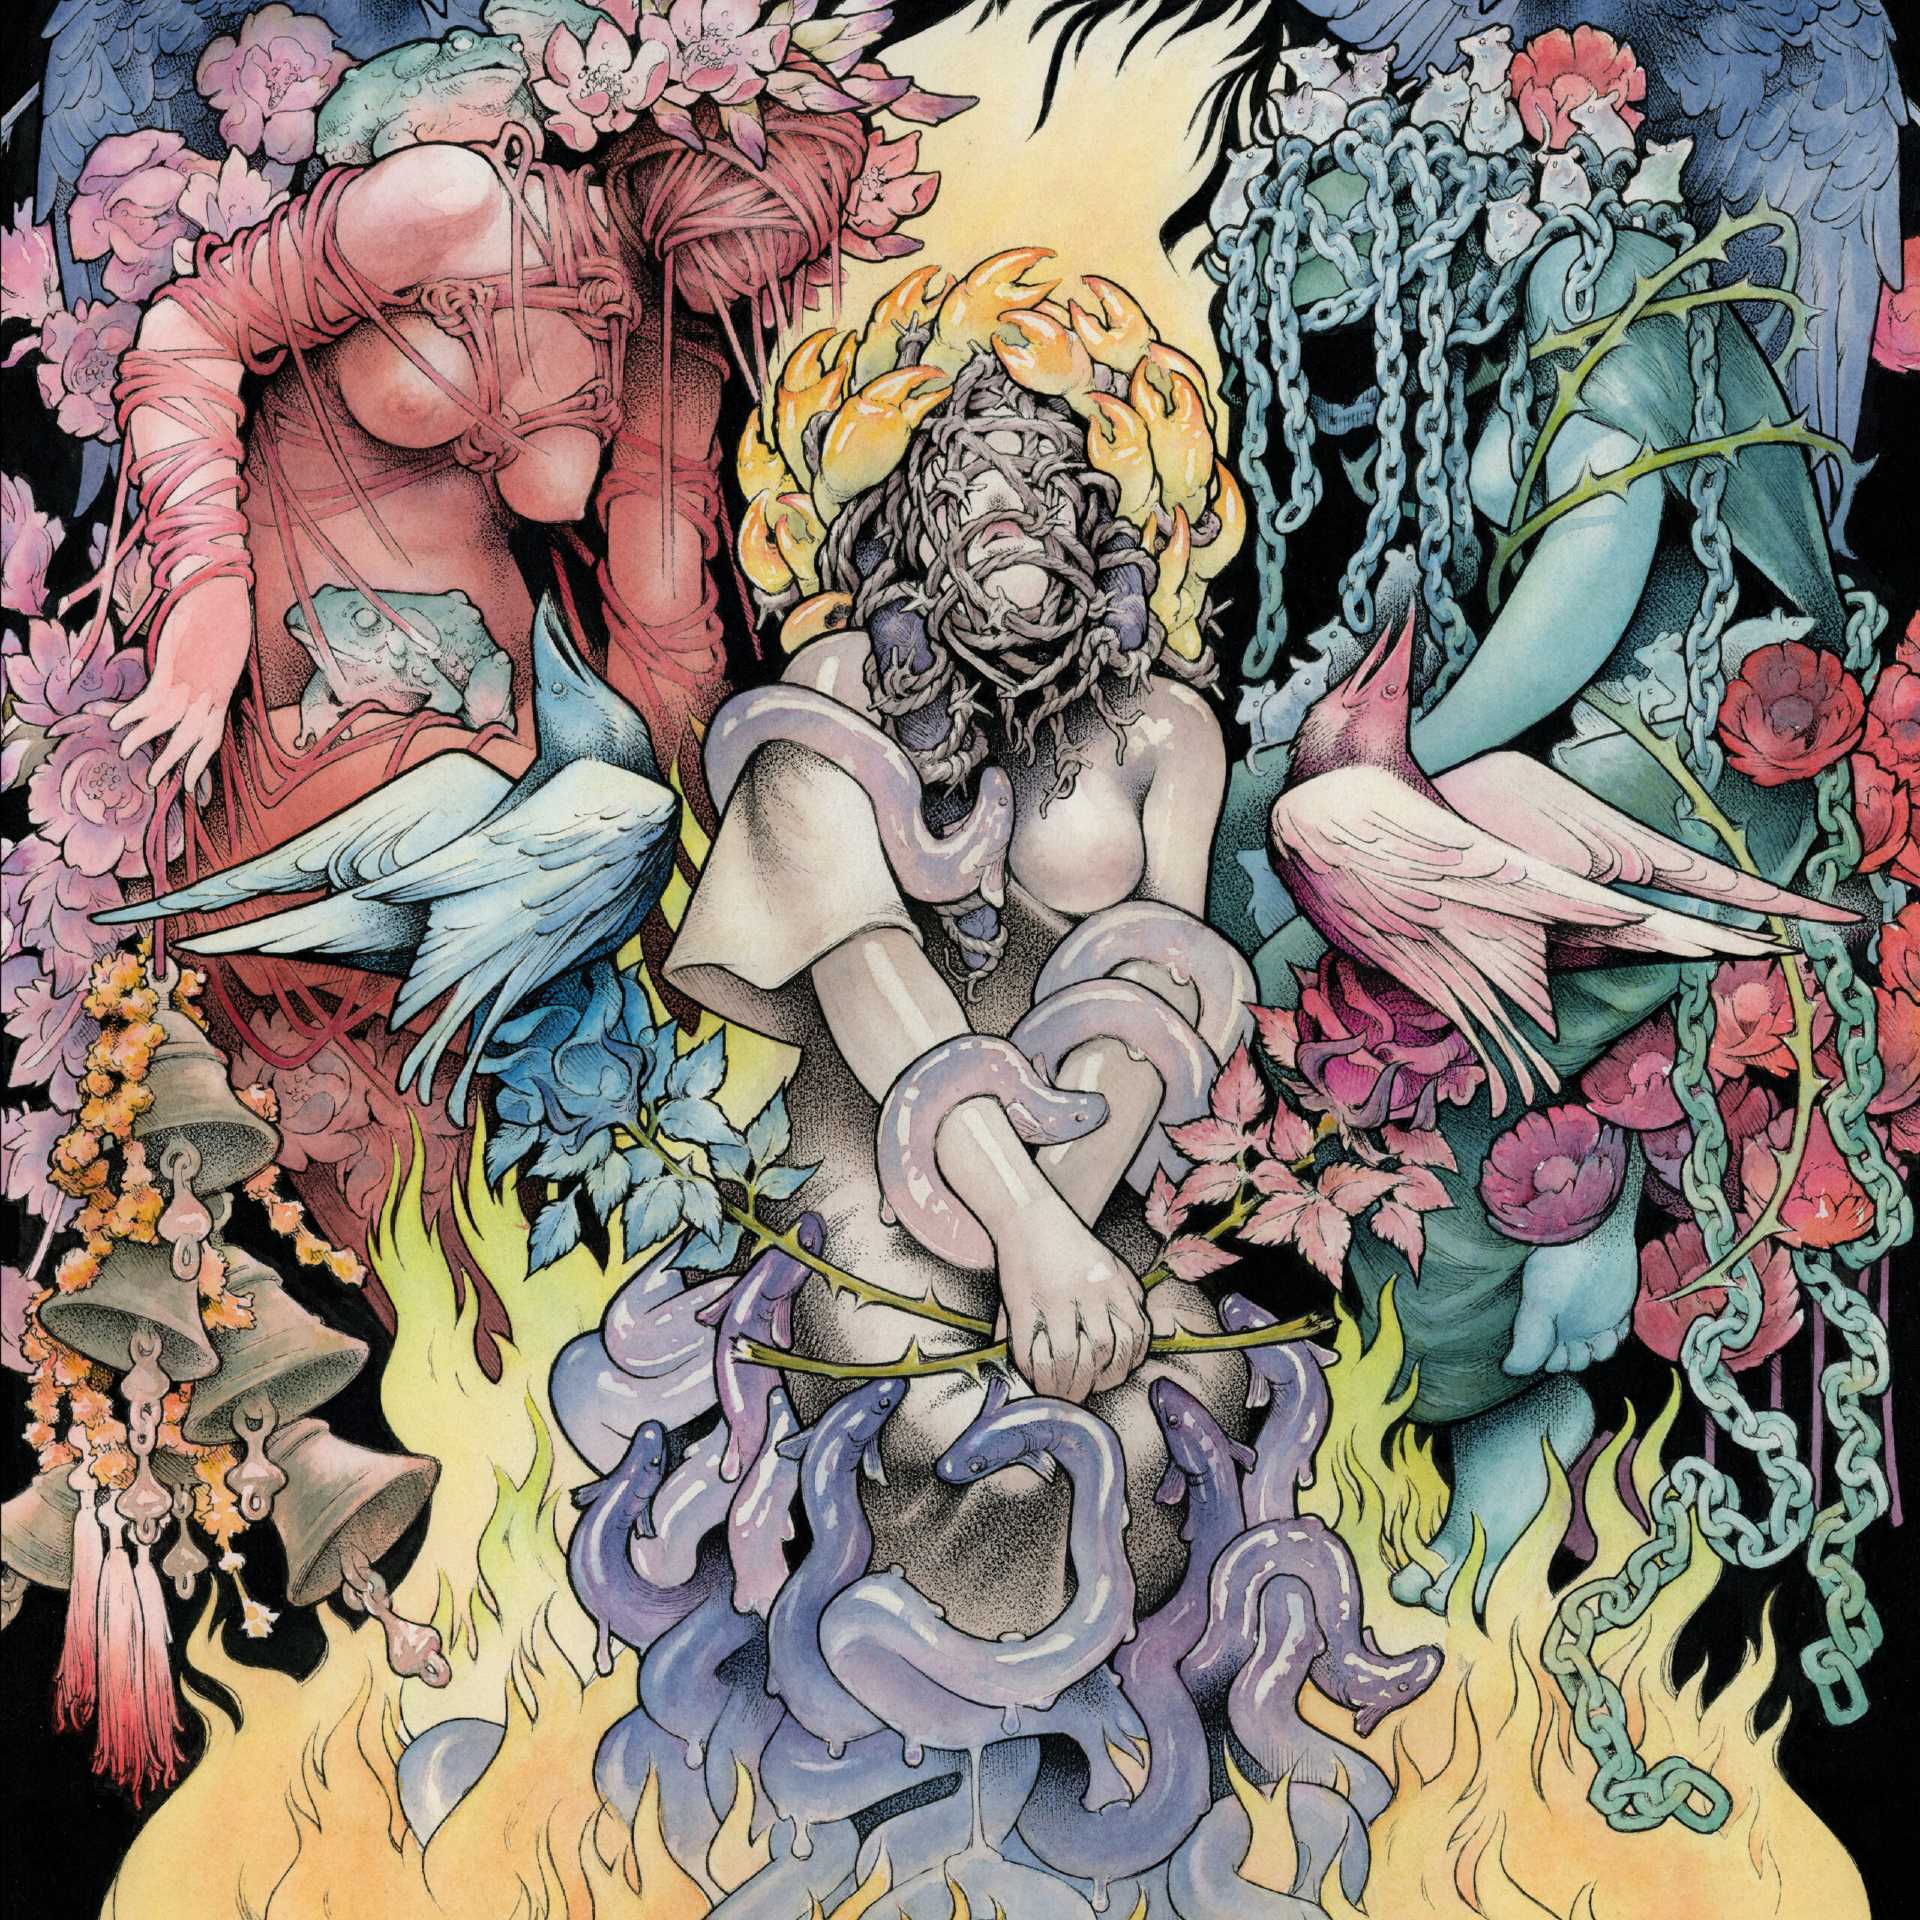 Baroness ‘STONE’ album artwork